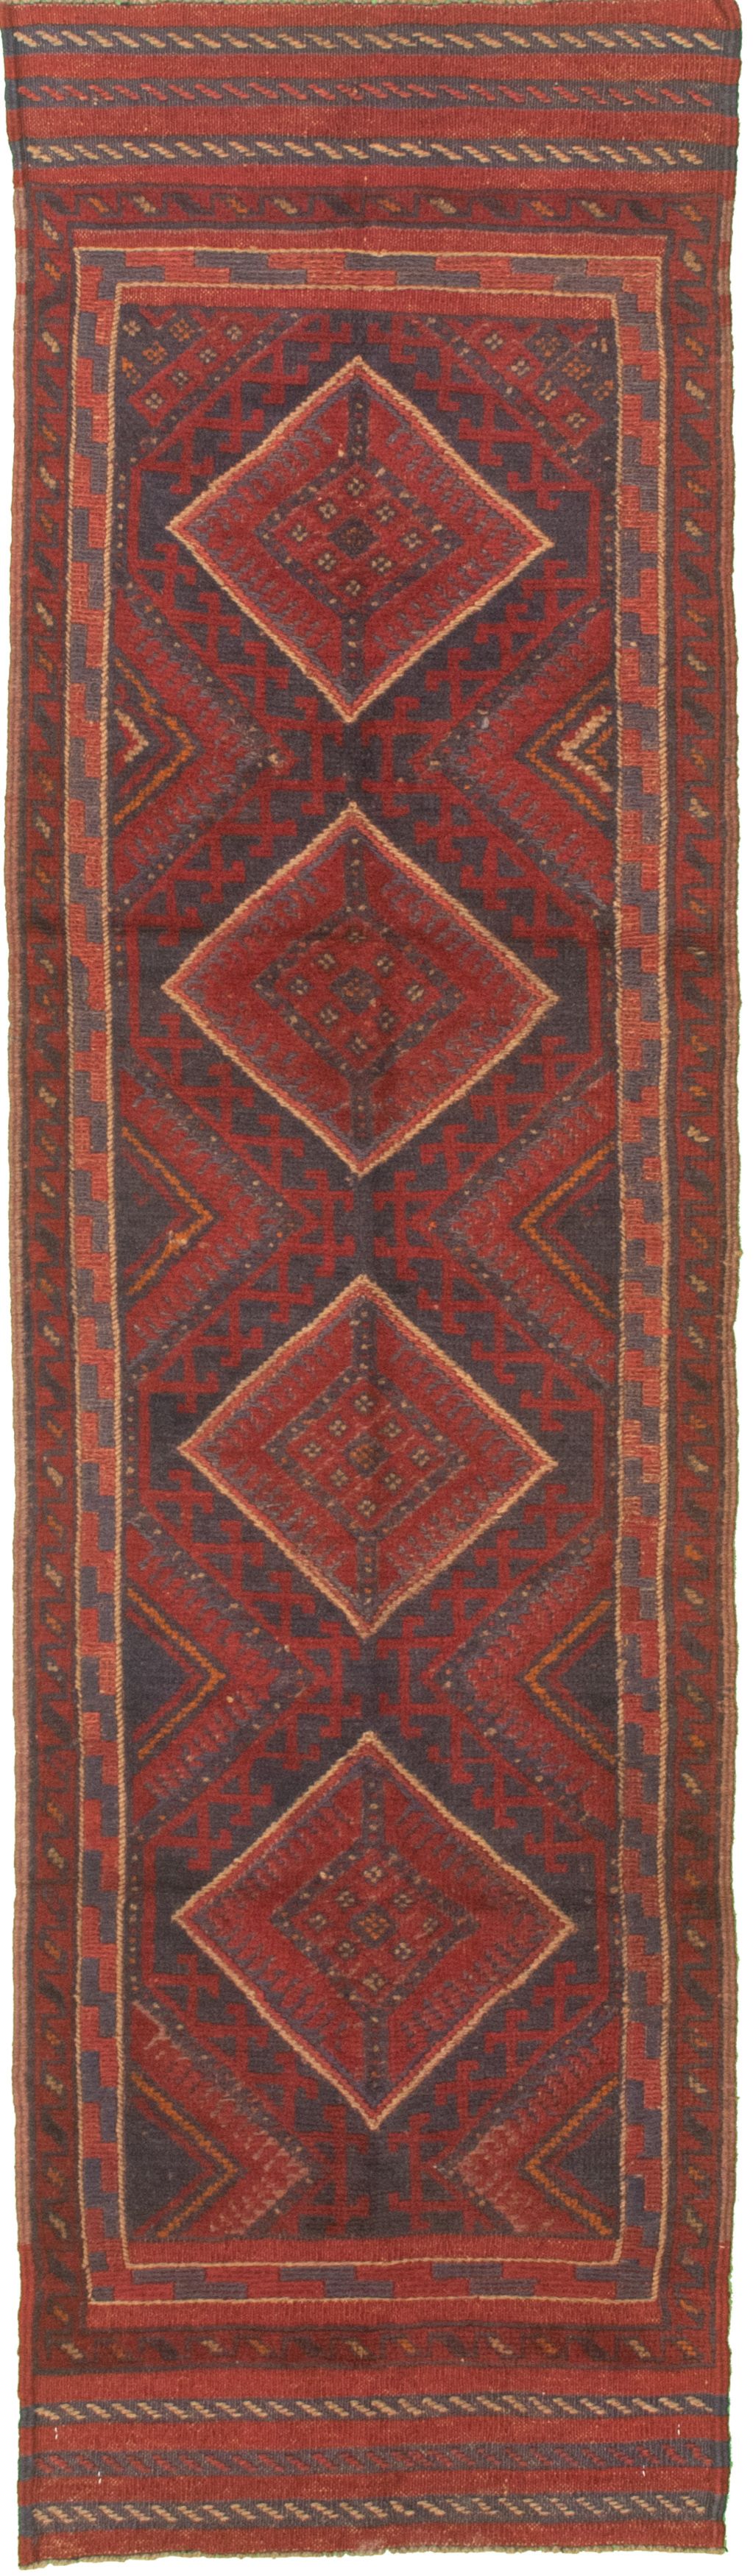 Hand-knotted Tajik Caucasian Red Wool Rug 2'0" x 8'5" (14) Size: 2'0" x 8'5"  